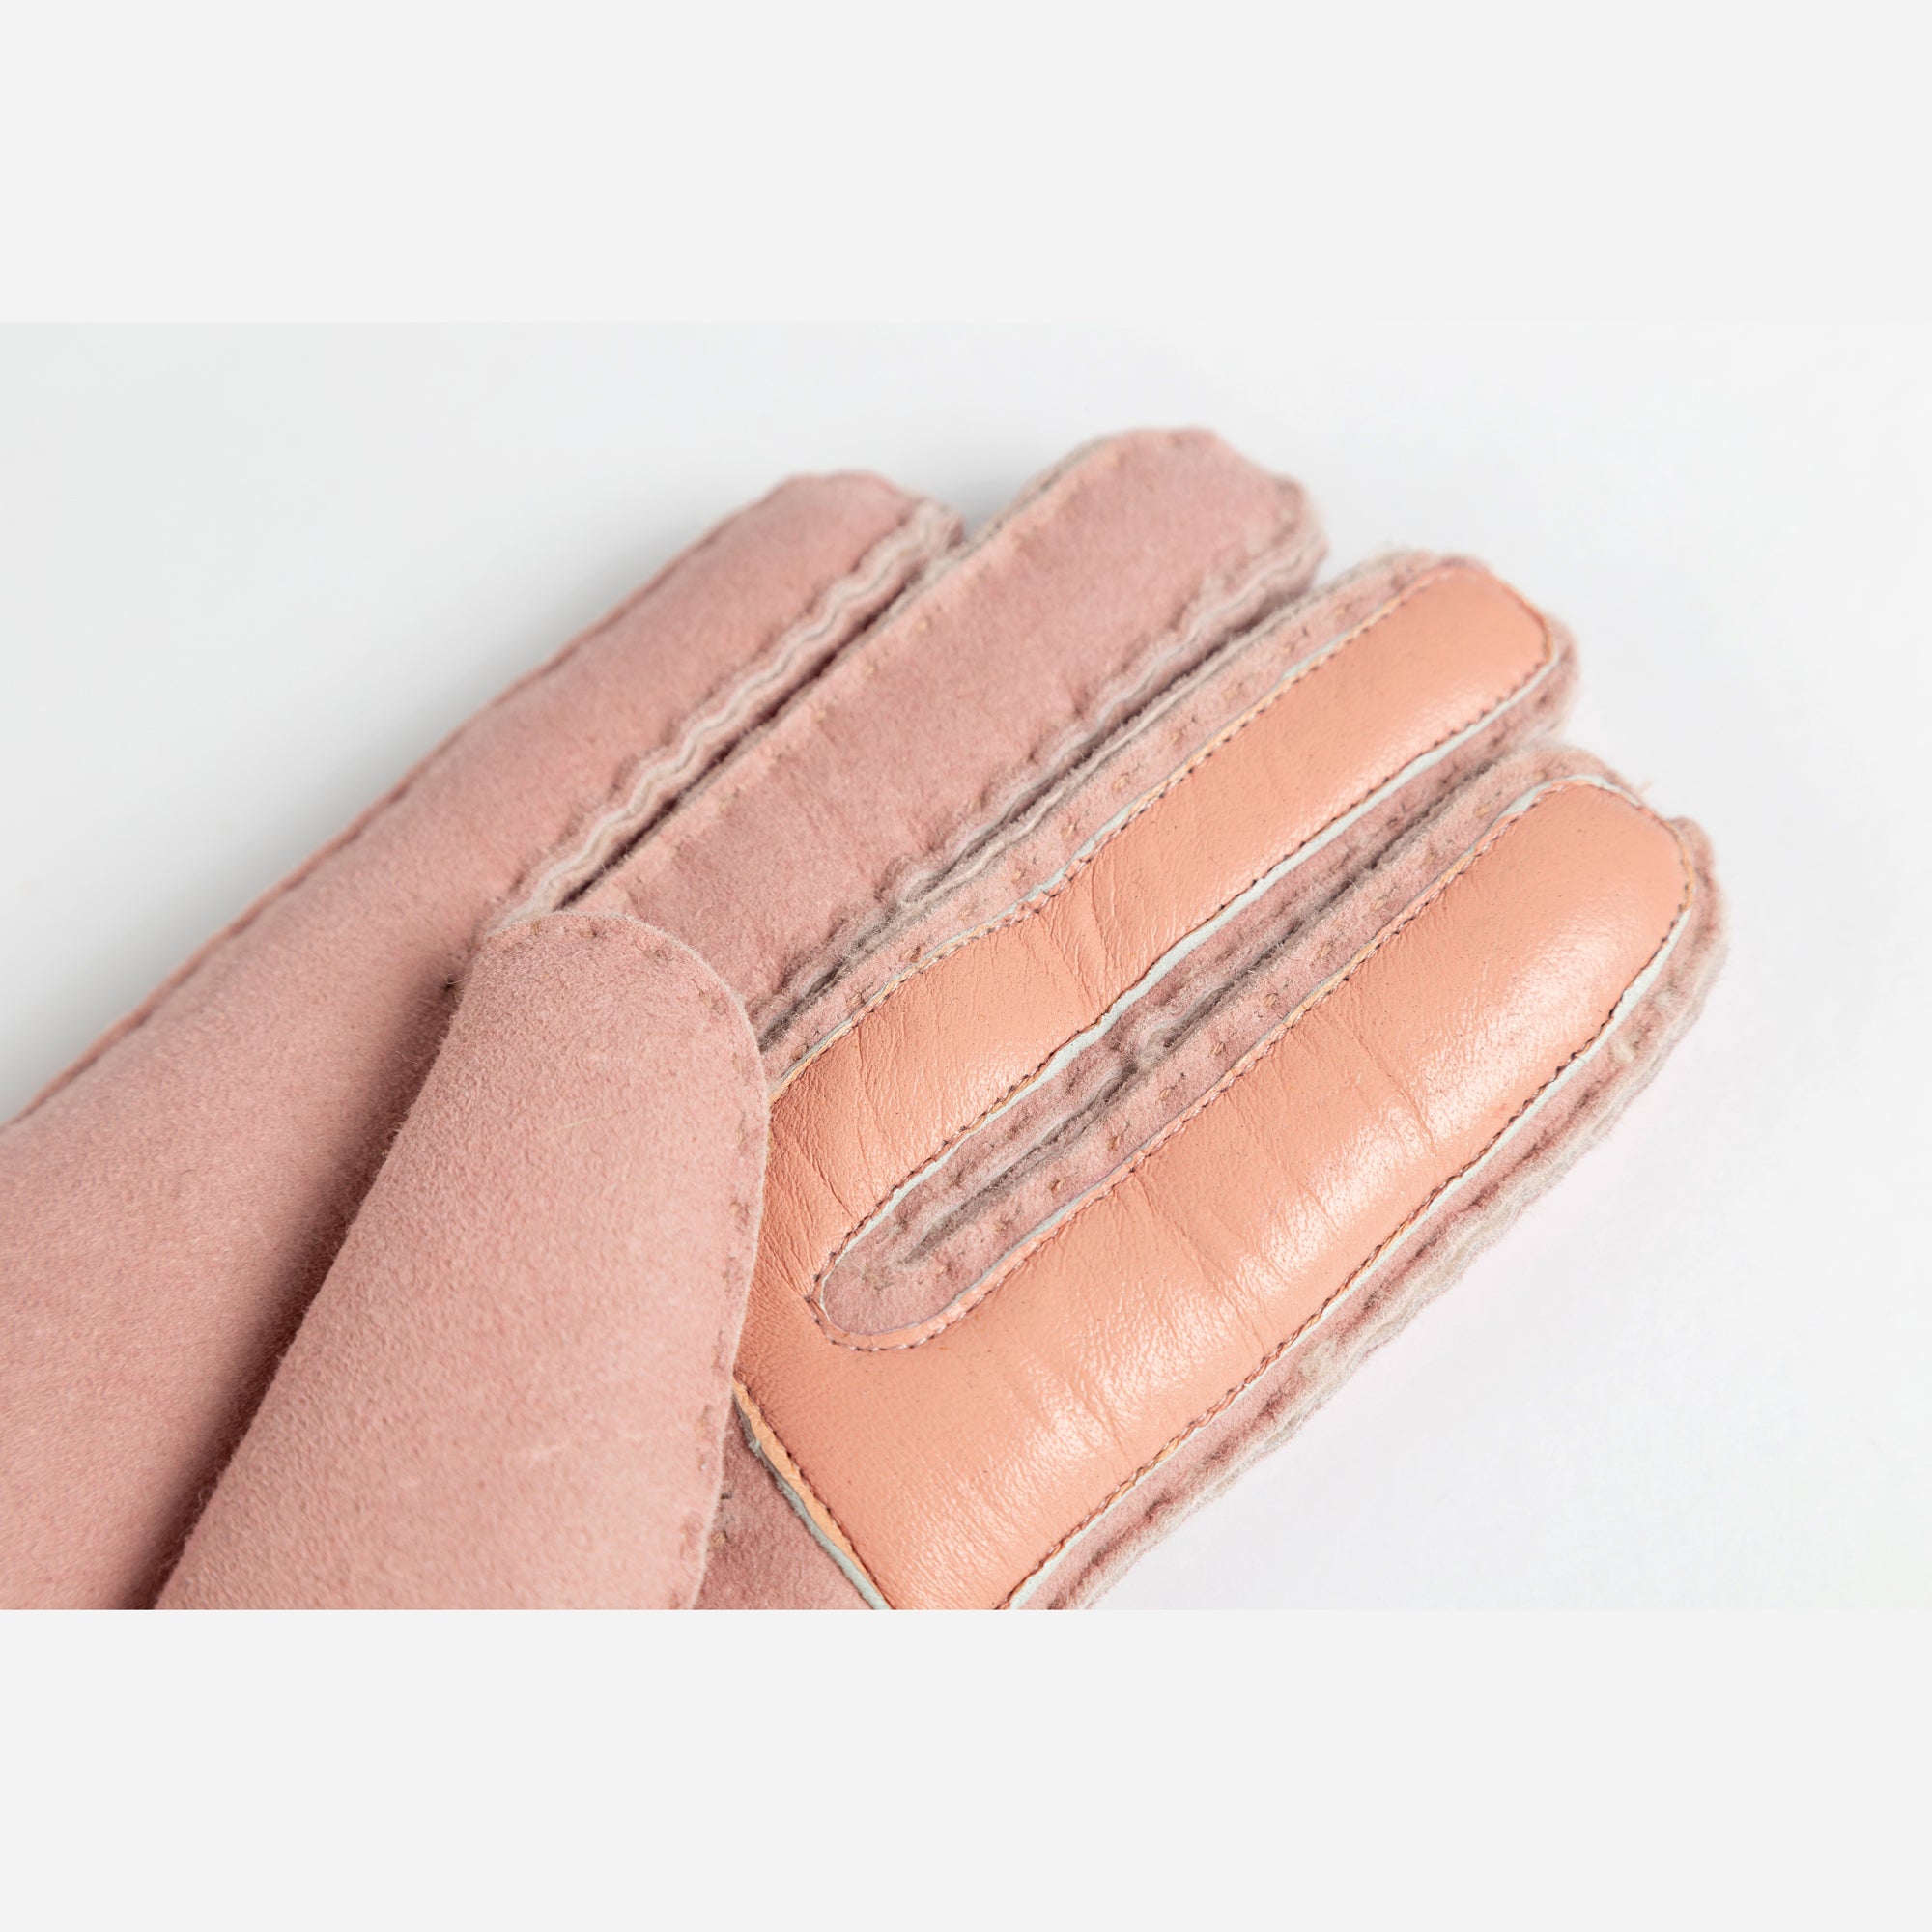 Ugg Sheepskin Touch Screen Gloves